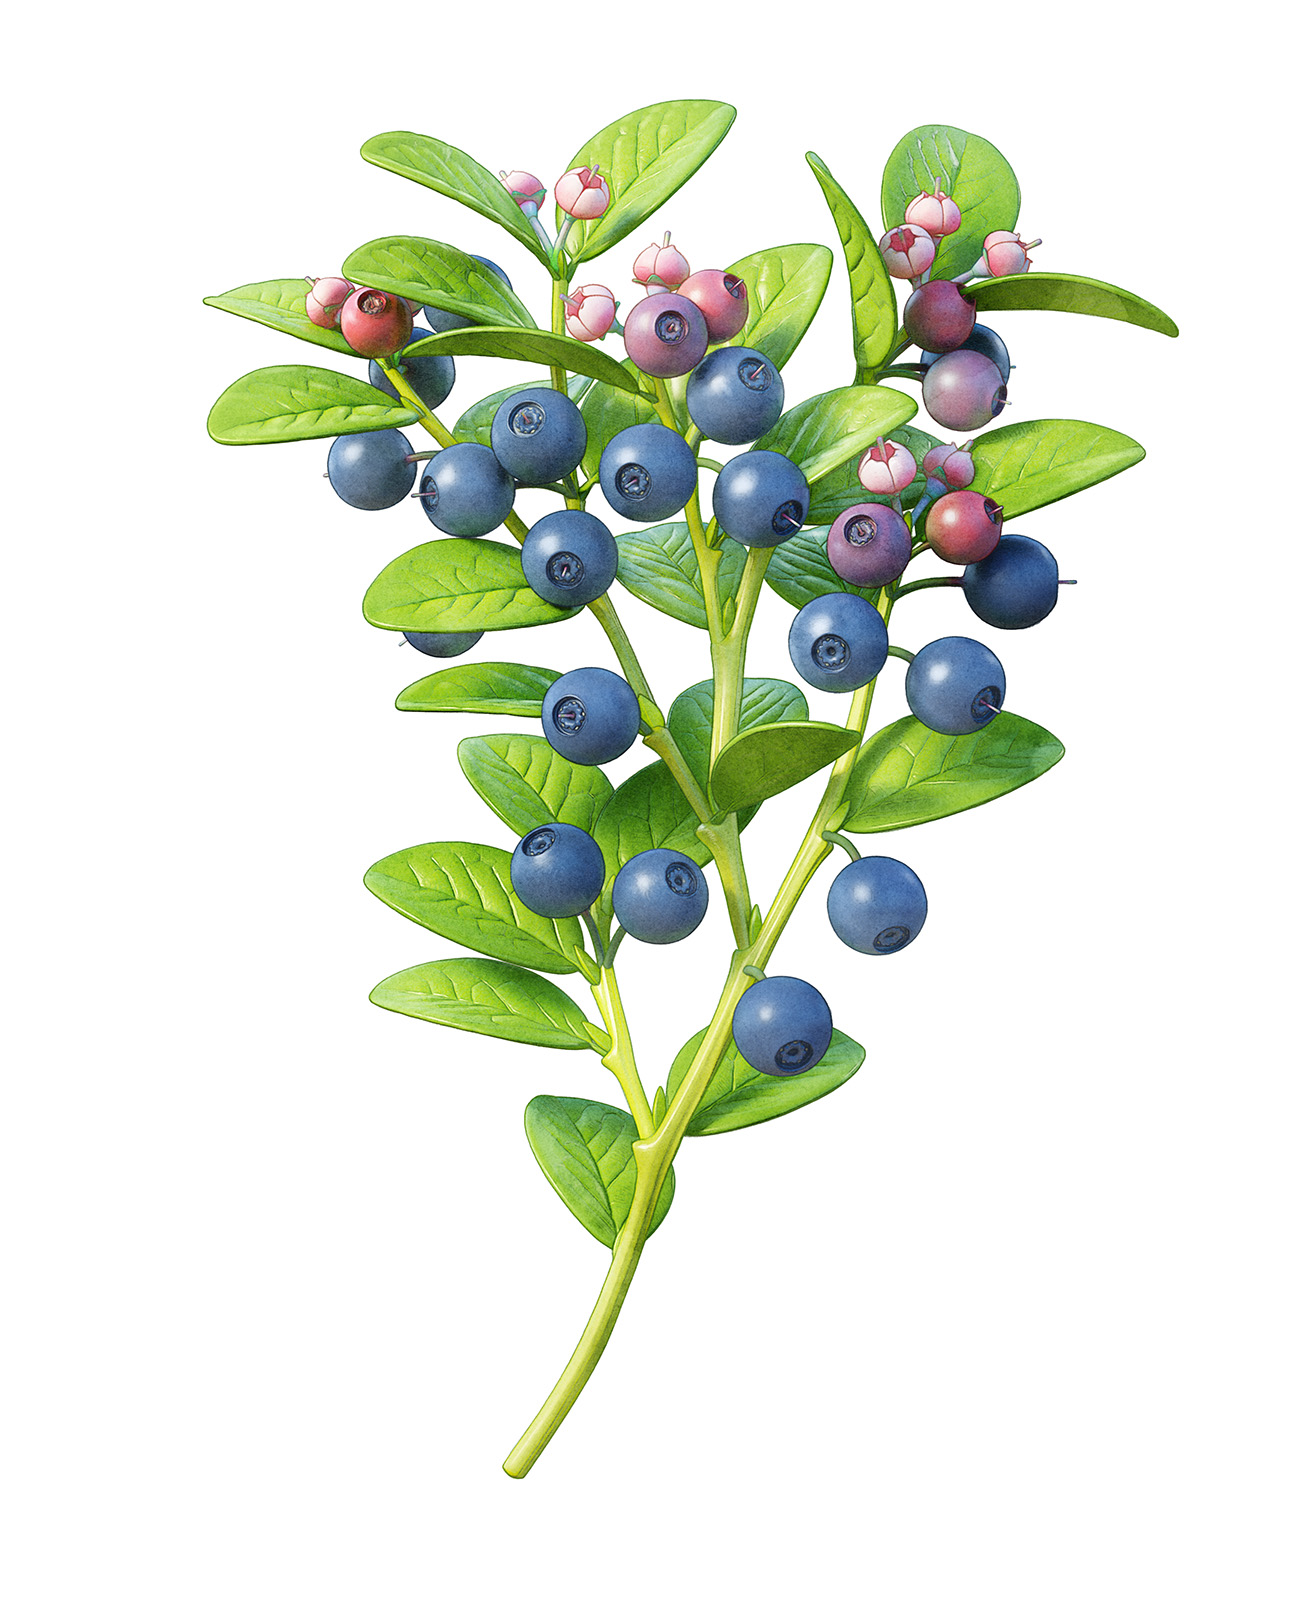 a branch of blueberries, with floral leaves, blåbär blommor blad kvist skogsbär